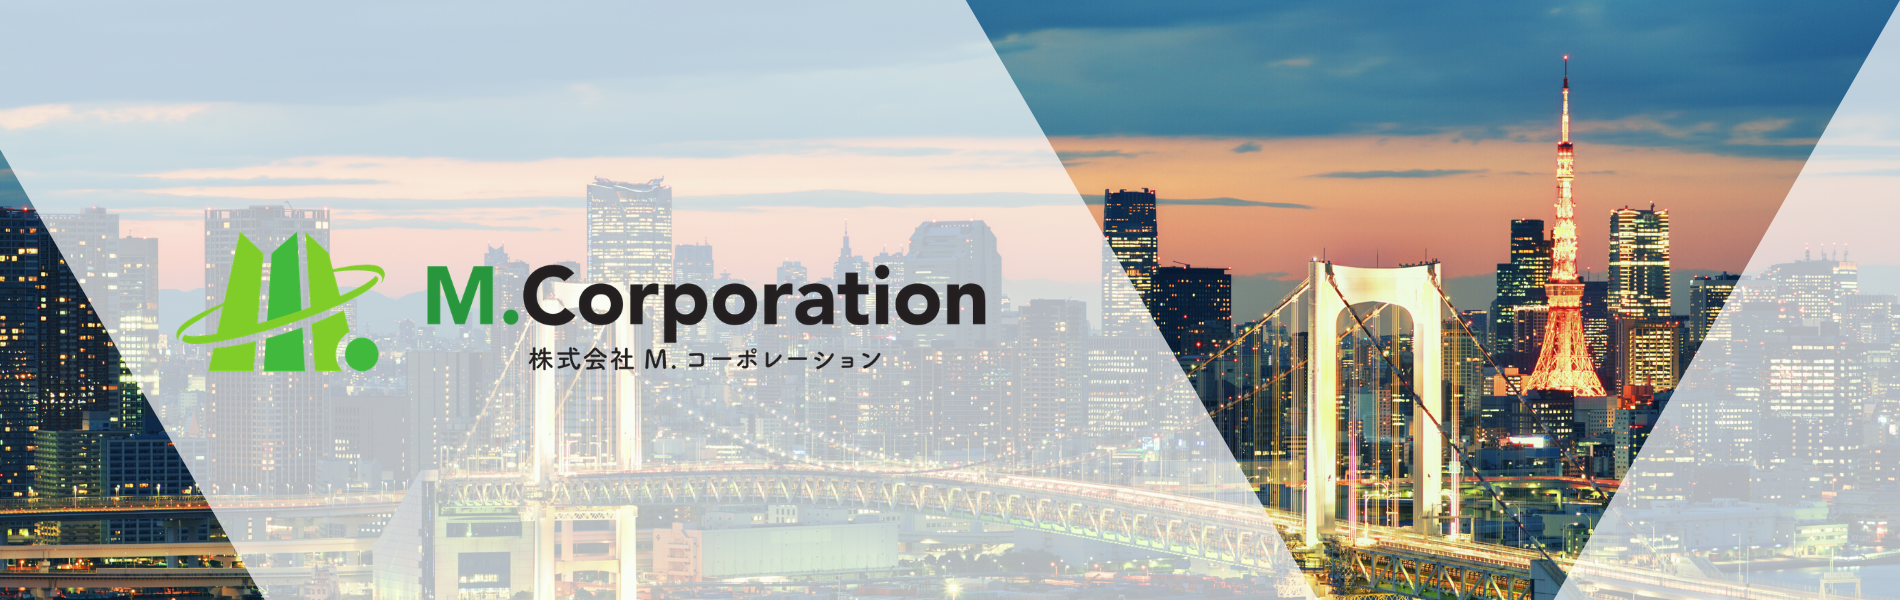 M.Corporation